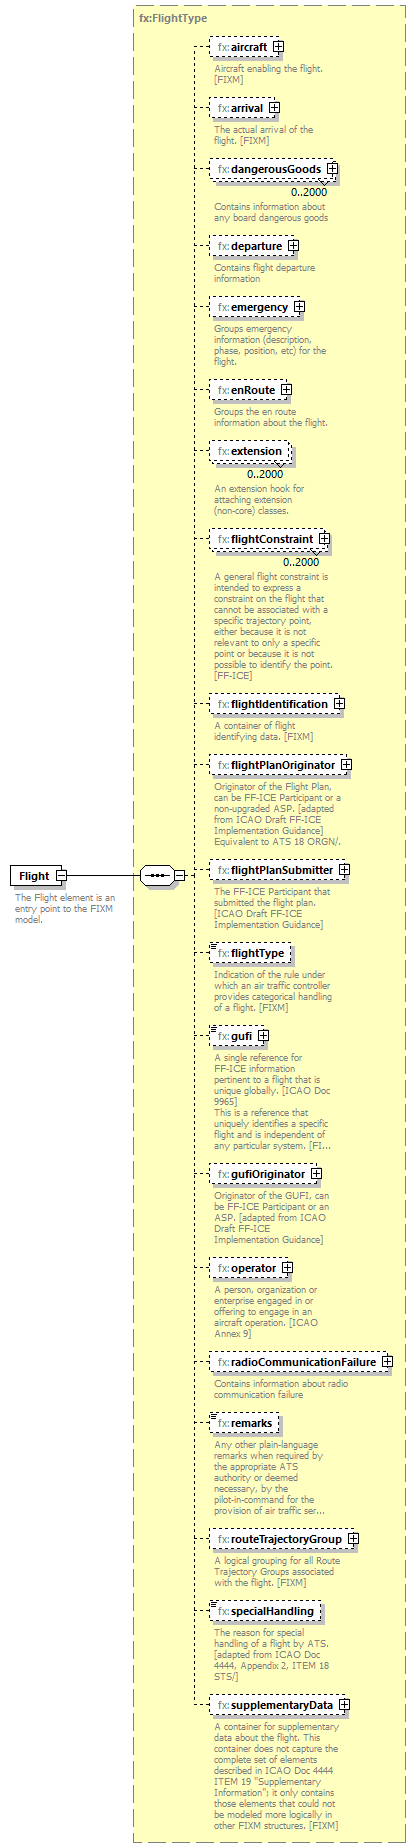 BasicMessage_diagrams/BasicMessage_p329.png